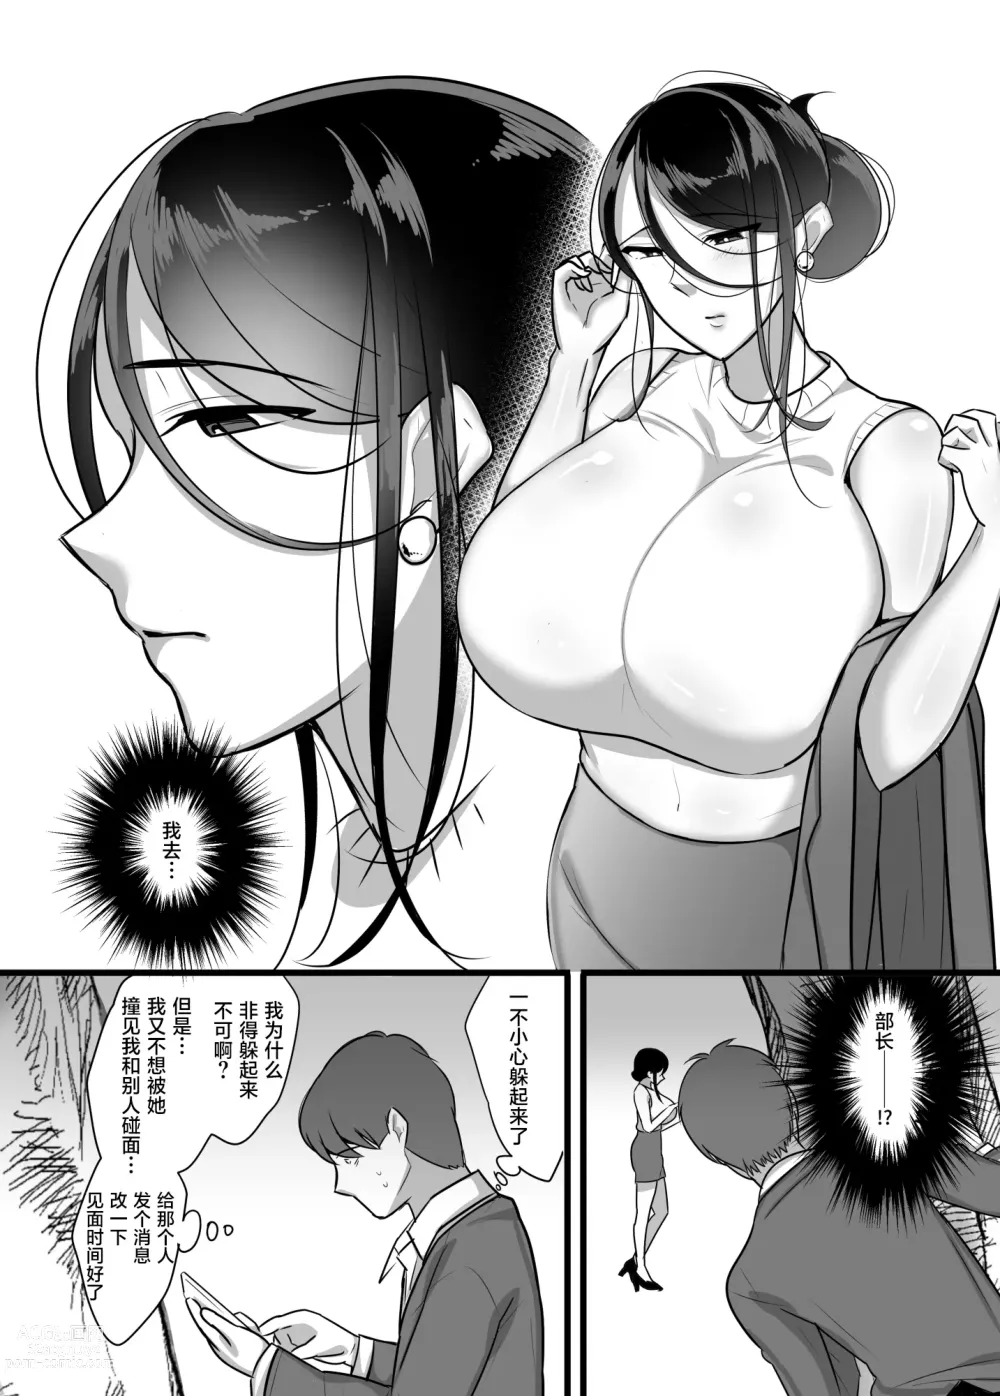 Page 7 of doujinshi 没想到那个魔鬼上司居然会成为我的炮友...